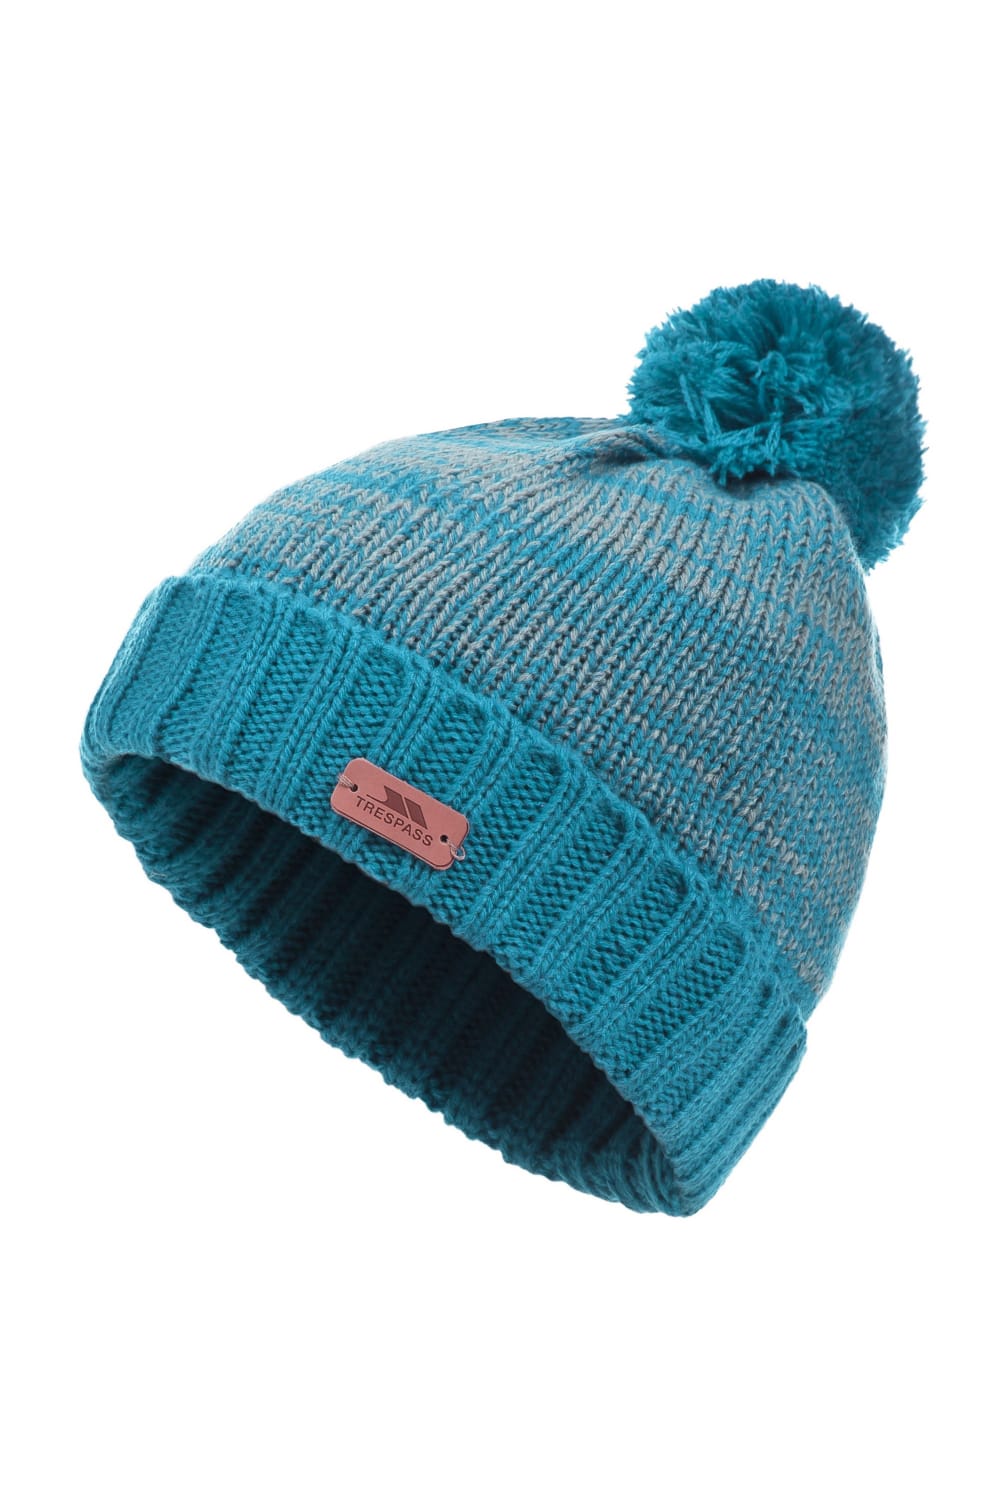 Trespass Childrens/Kids Florrick Knitted Winter Pom Pom Hat (Cobalt)